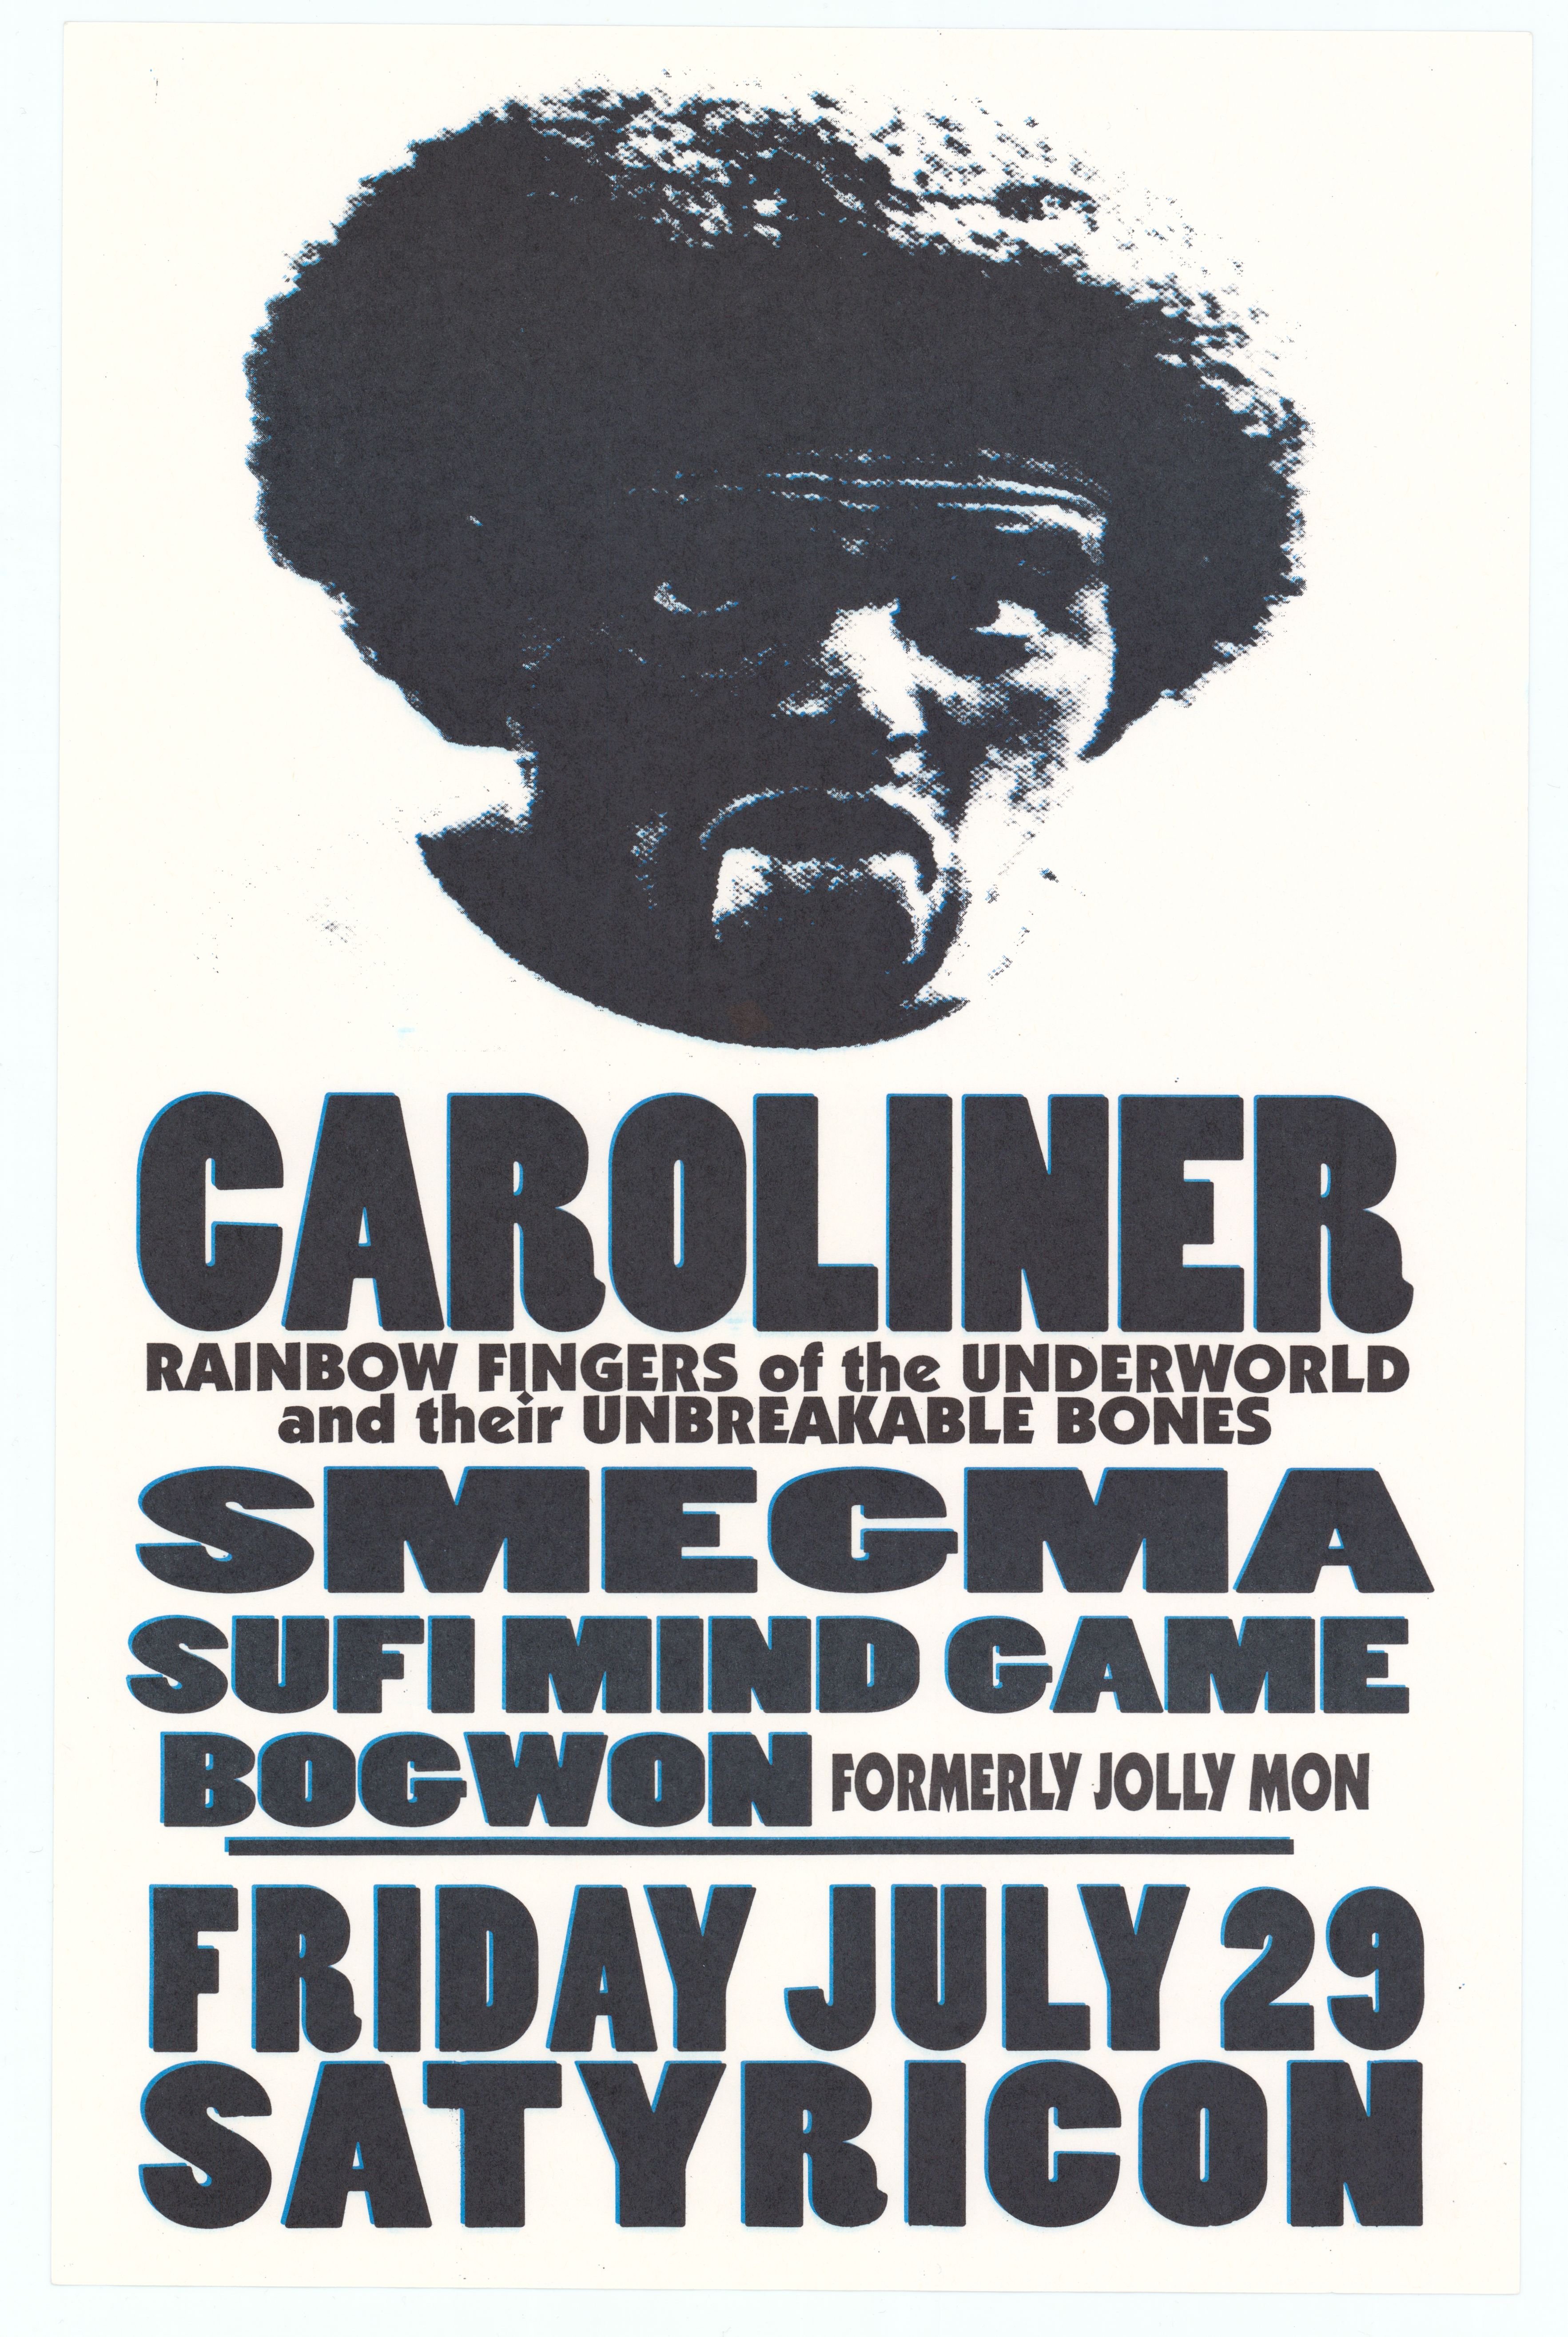 Caroliner Rainbow Fingers of the Underworld and their Unbreakable Bones Satyricon 1000-07-29 1000 Satyricon Jul 29 Concert Poster